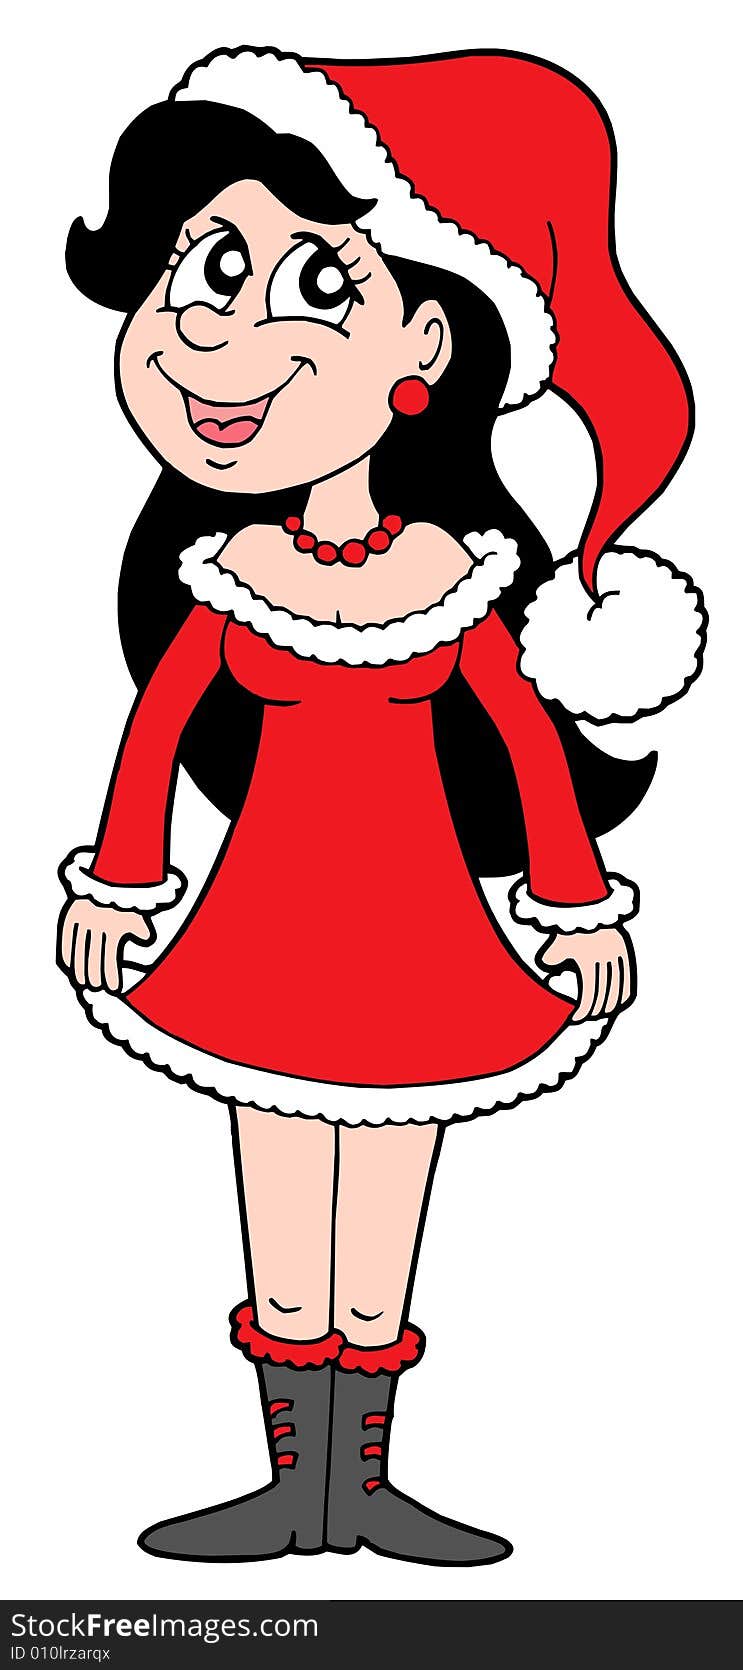 Christmas girl in red dress - vector illustration. Christmas girl in red dress - vector illustration.